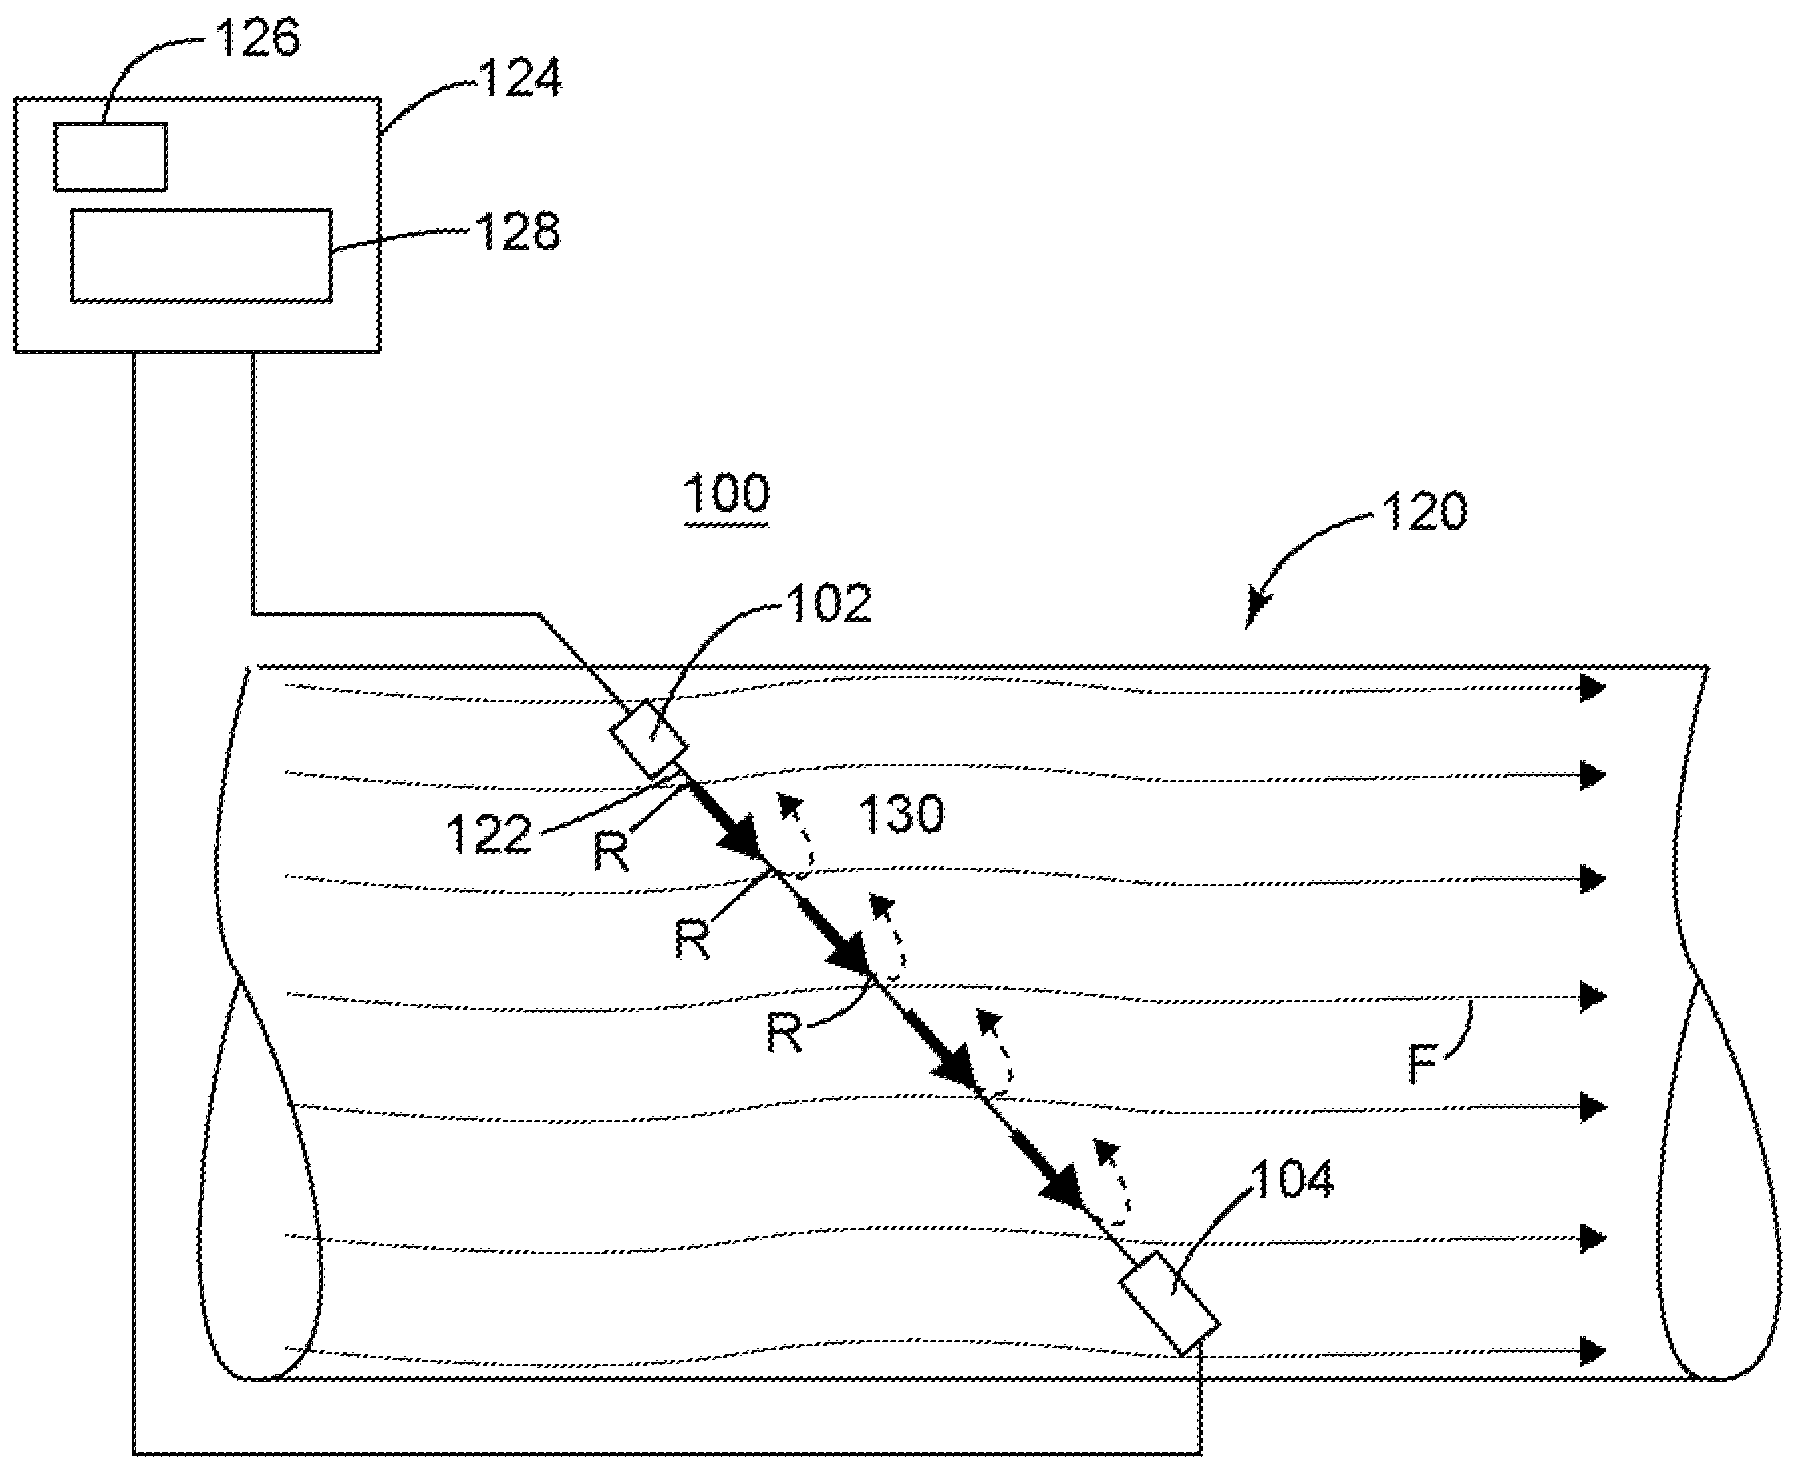 Ultrasonic flow meter system